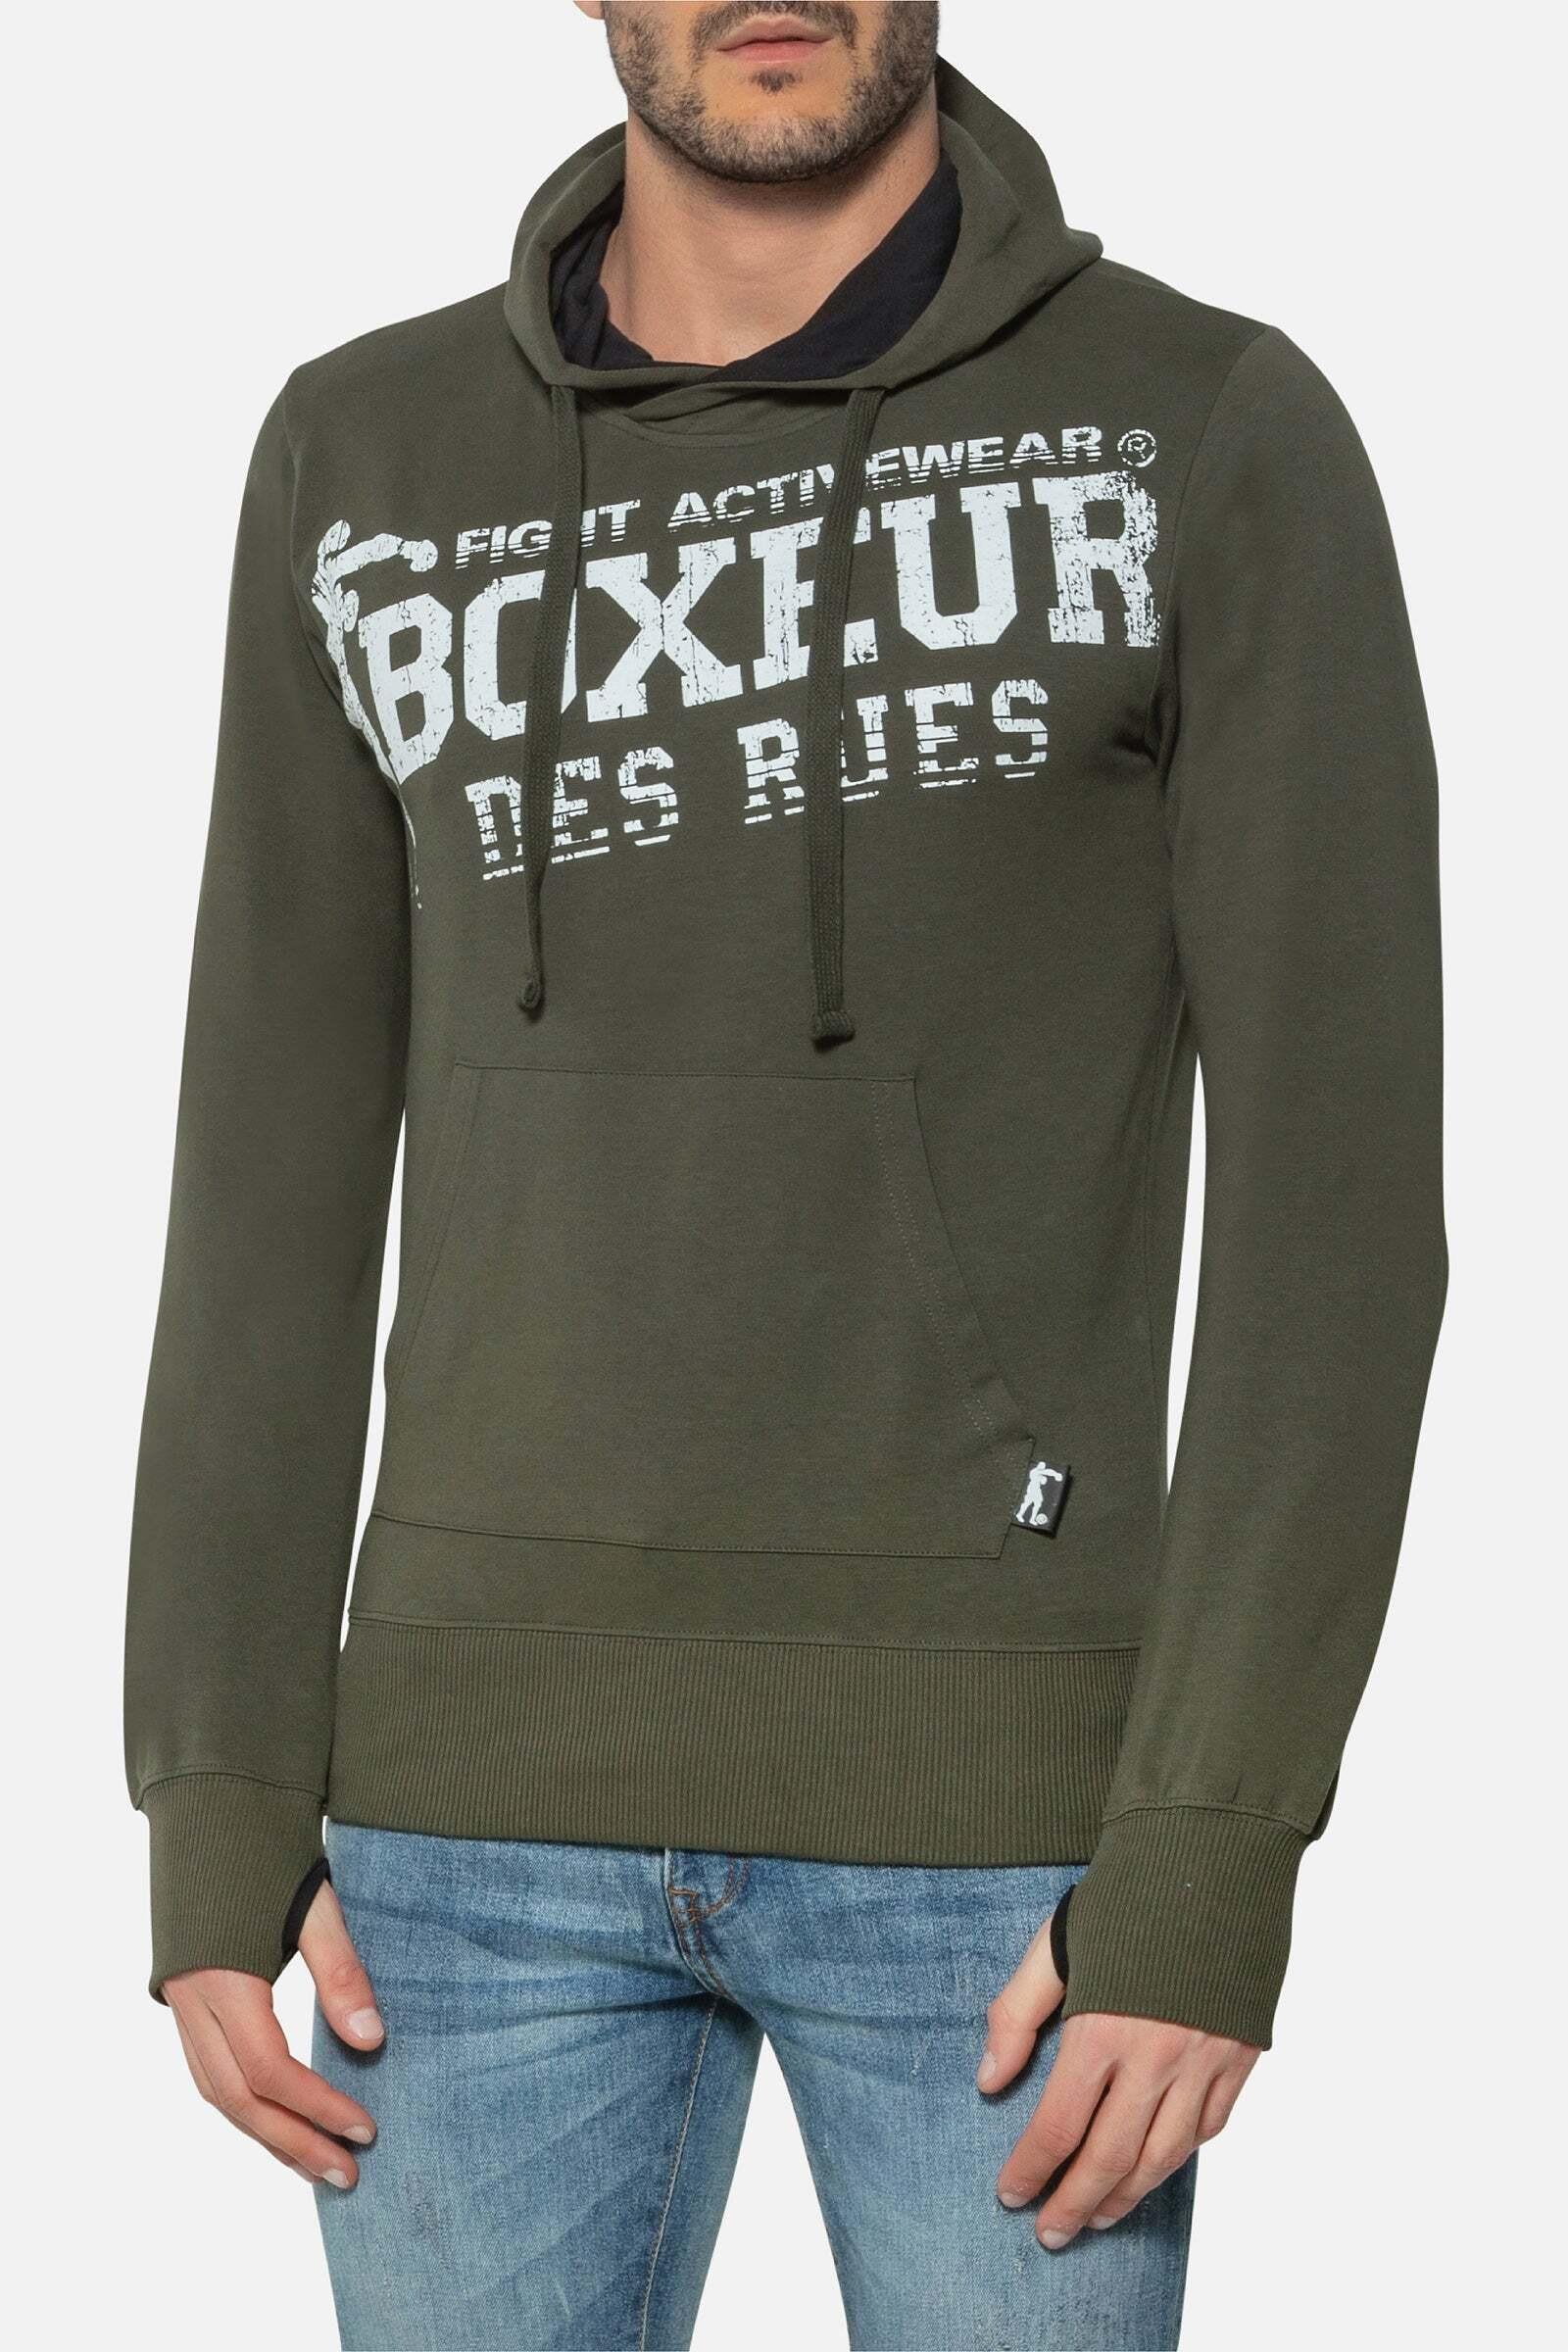 Kapuzenpullover Hooded Sweatshirt With Thumb Openings Herren Grün L von BOXEUR DES RUES